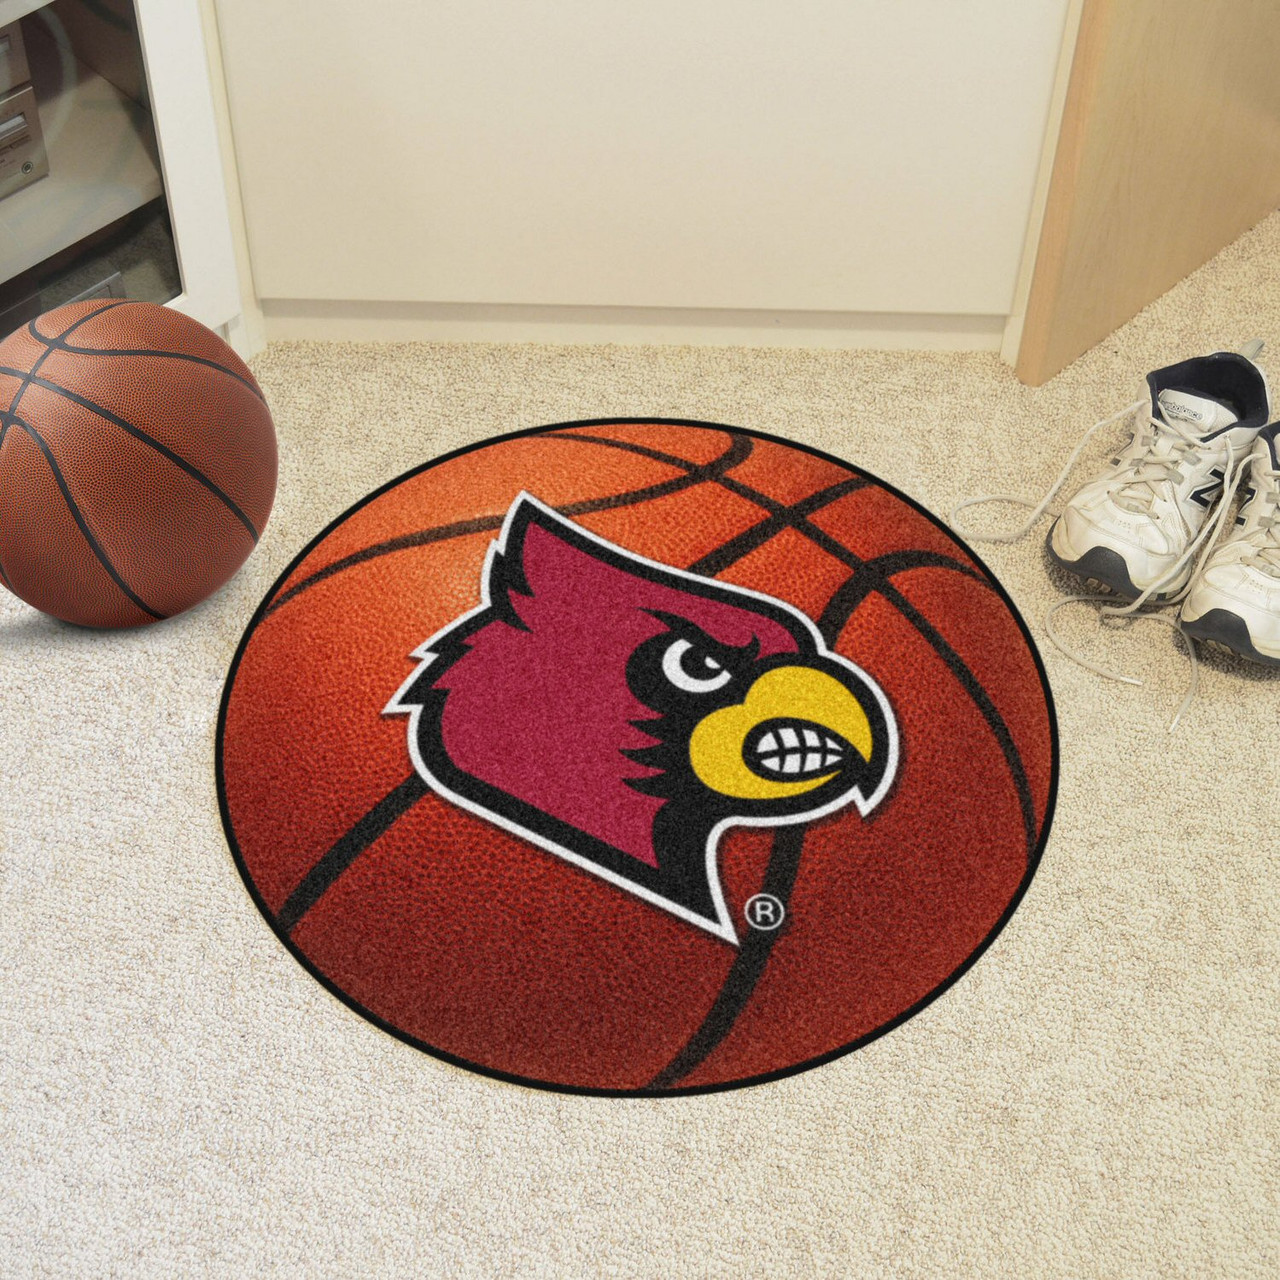 Fanmats University of Louisville Basketball Mat